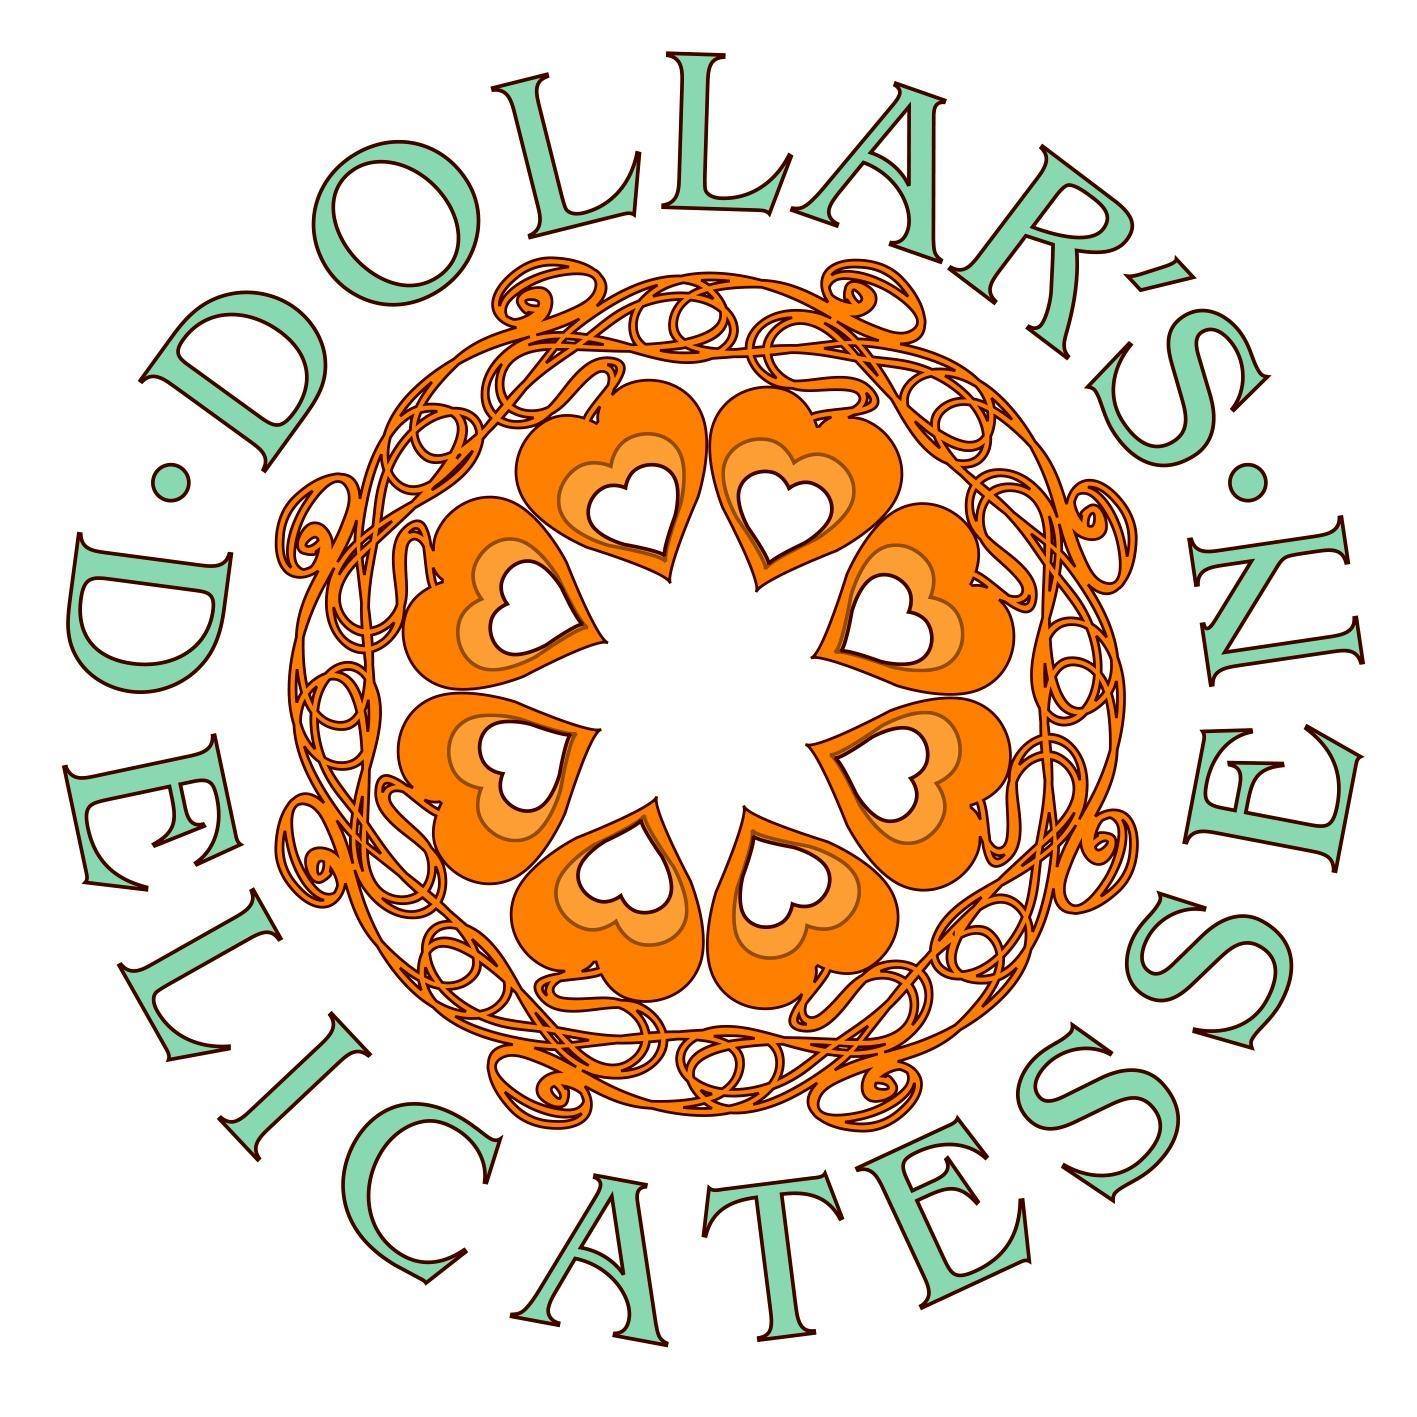 Dollar's Deli